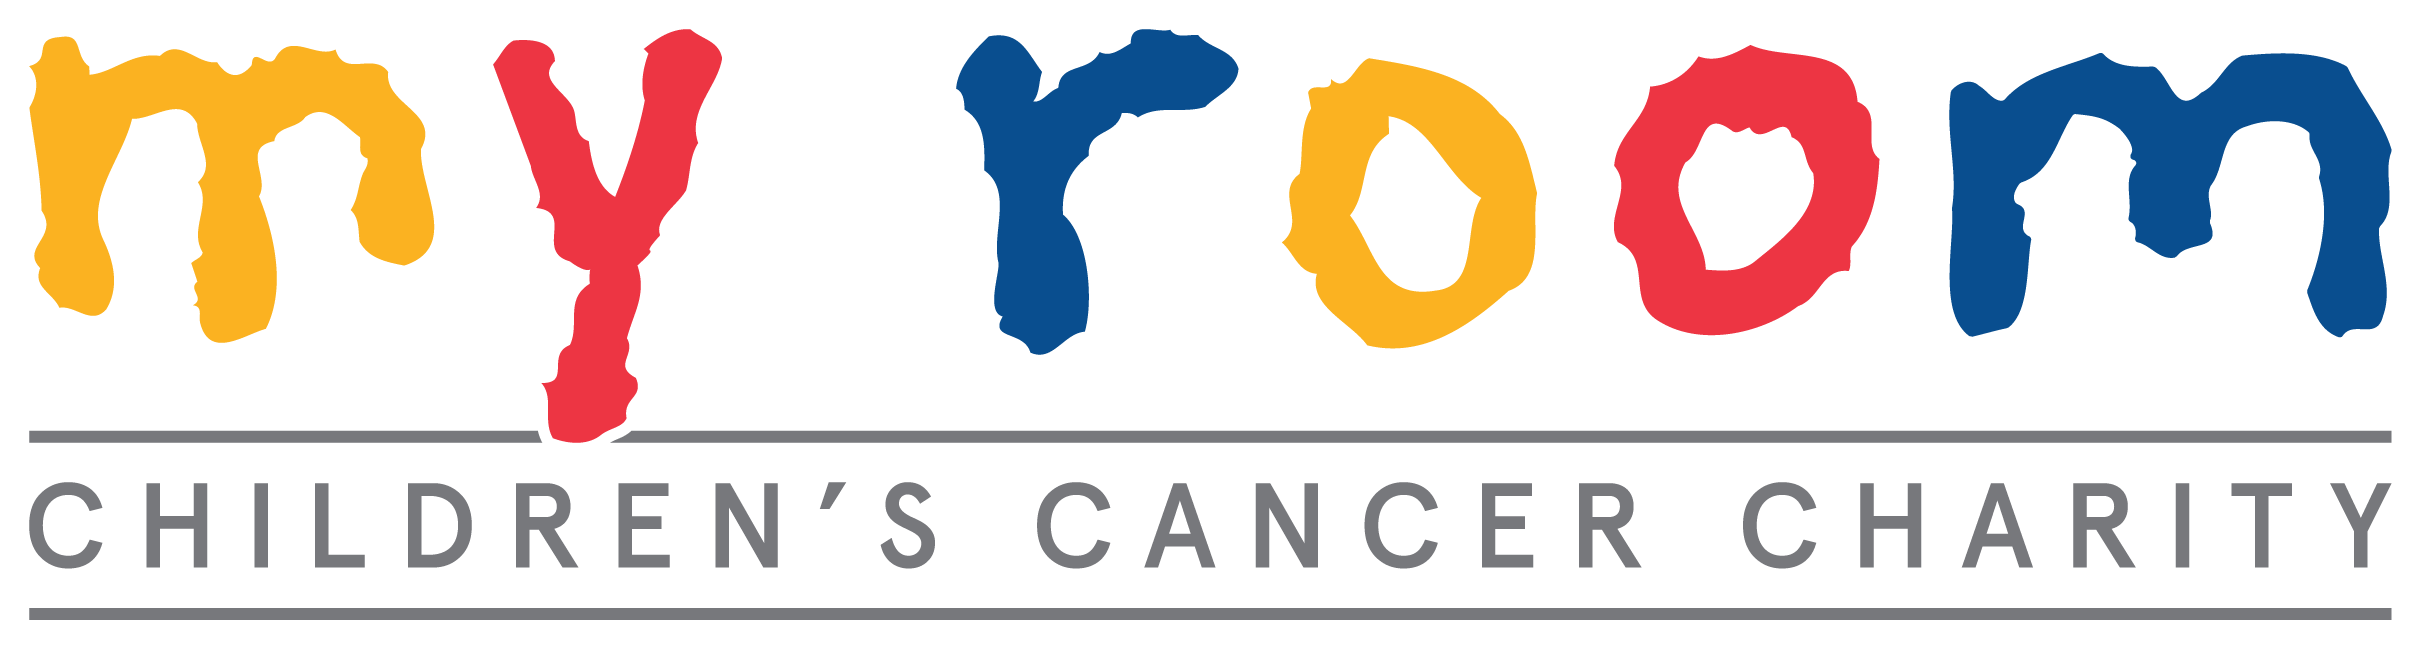 My Room Children's Cancer Charity logo